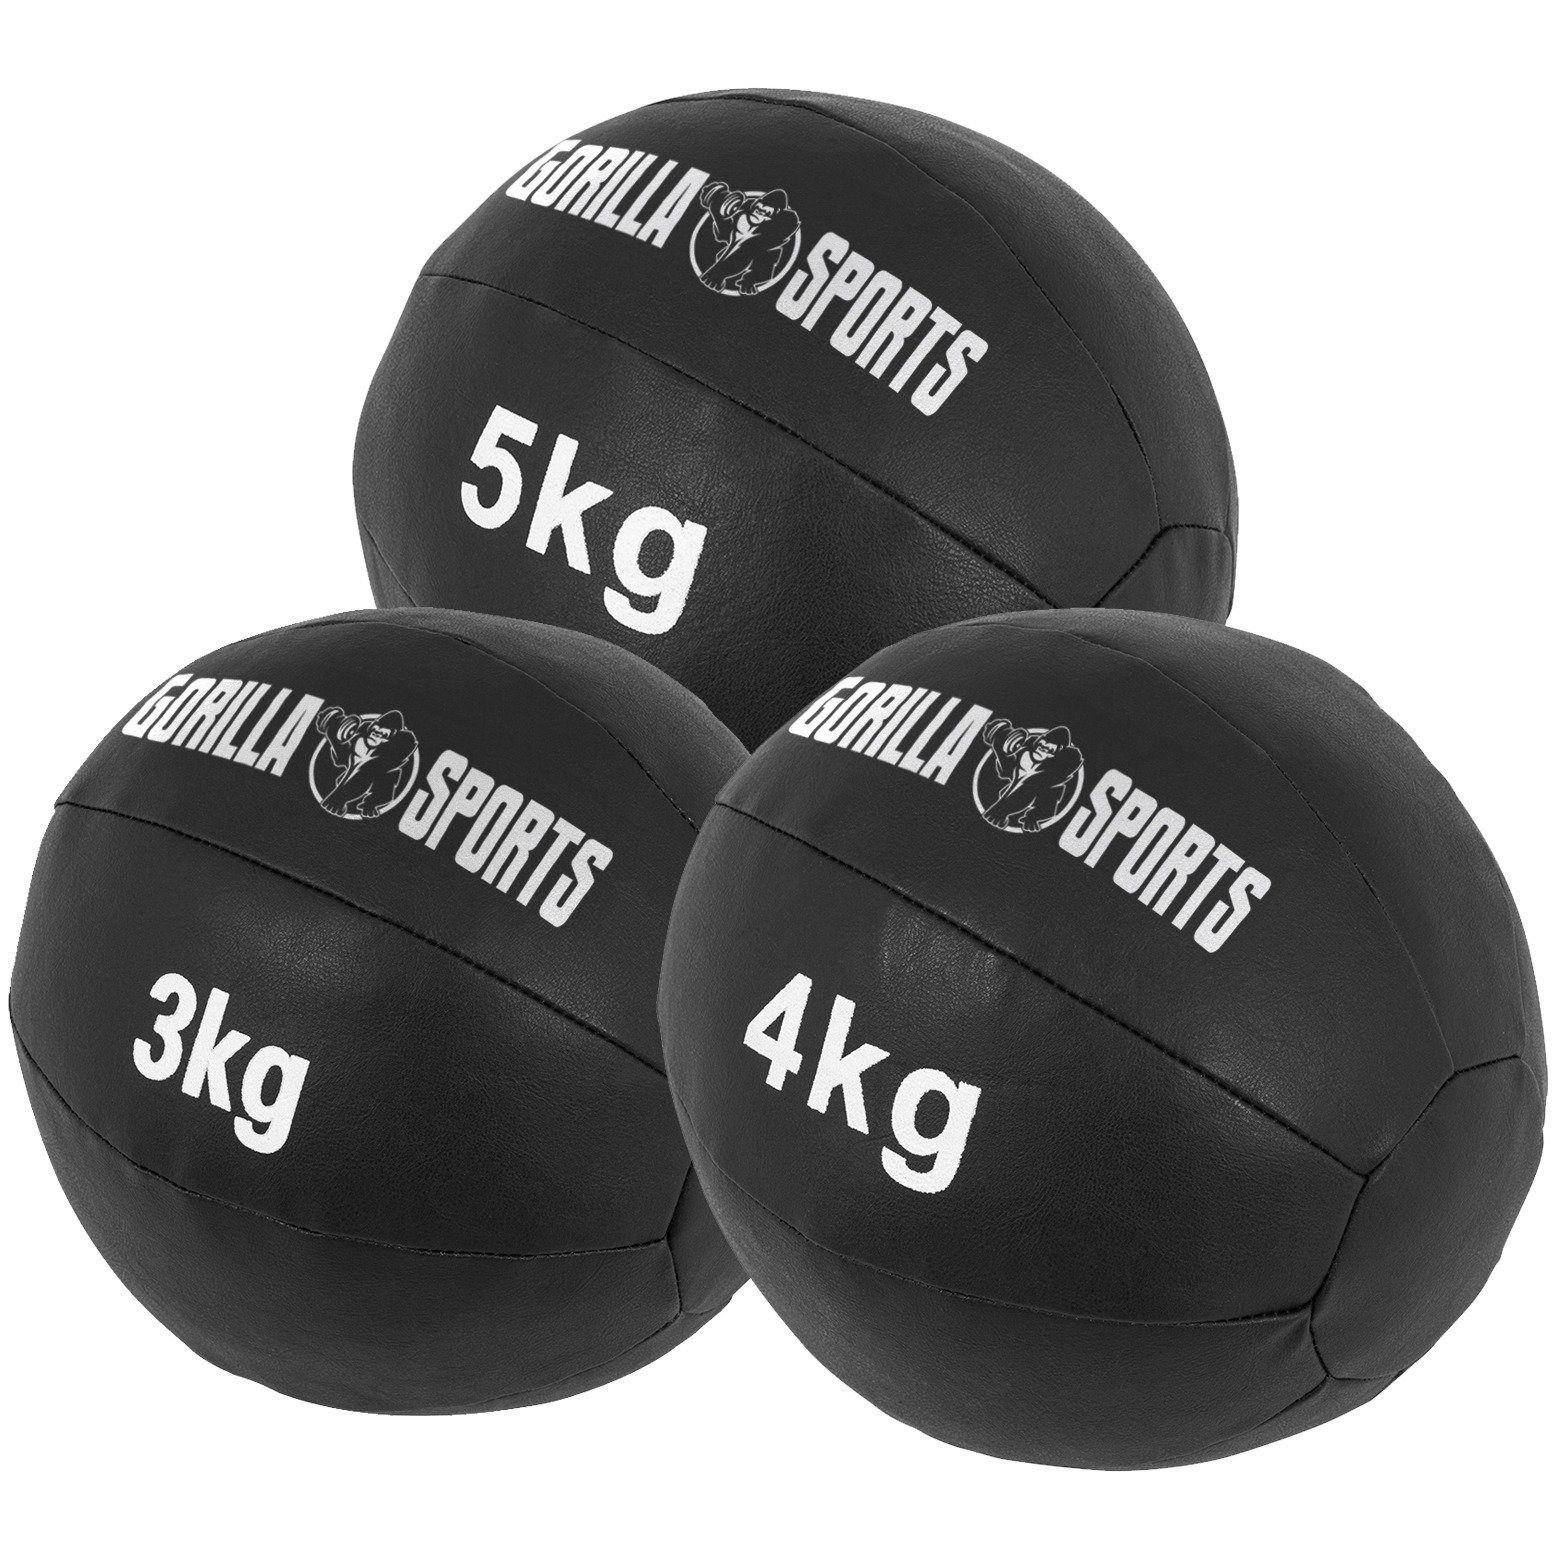 GORILLA SPORTS Medizinball Einzeln/Set, 29cm, aus Leder, Trainingsball, Fitnessball, Gewichtsball Set 12 kg